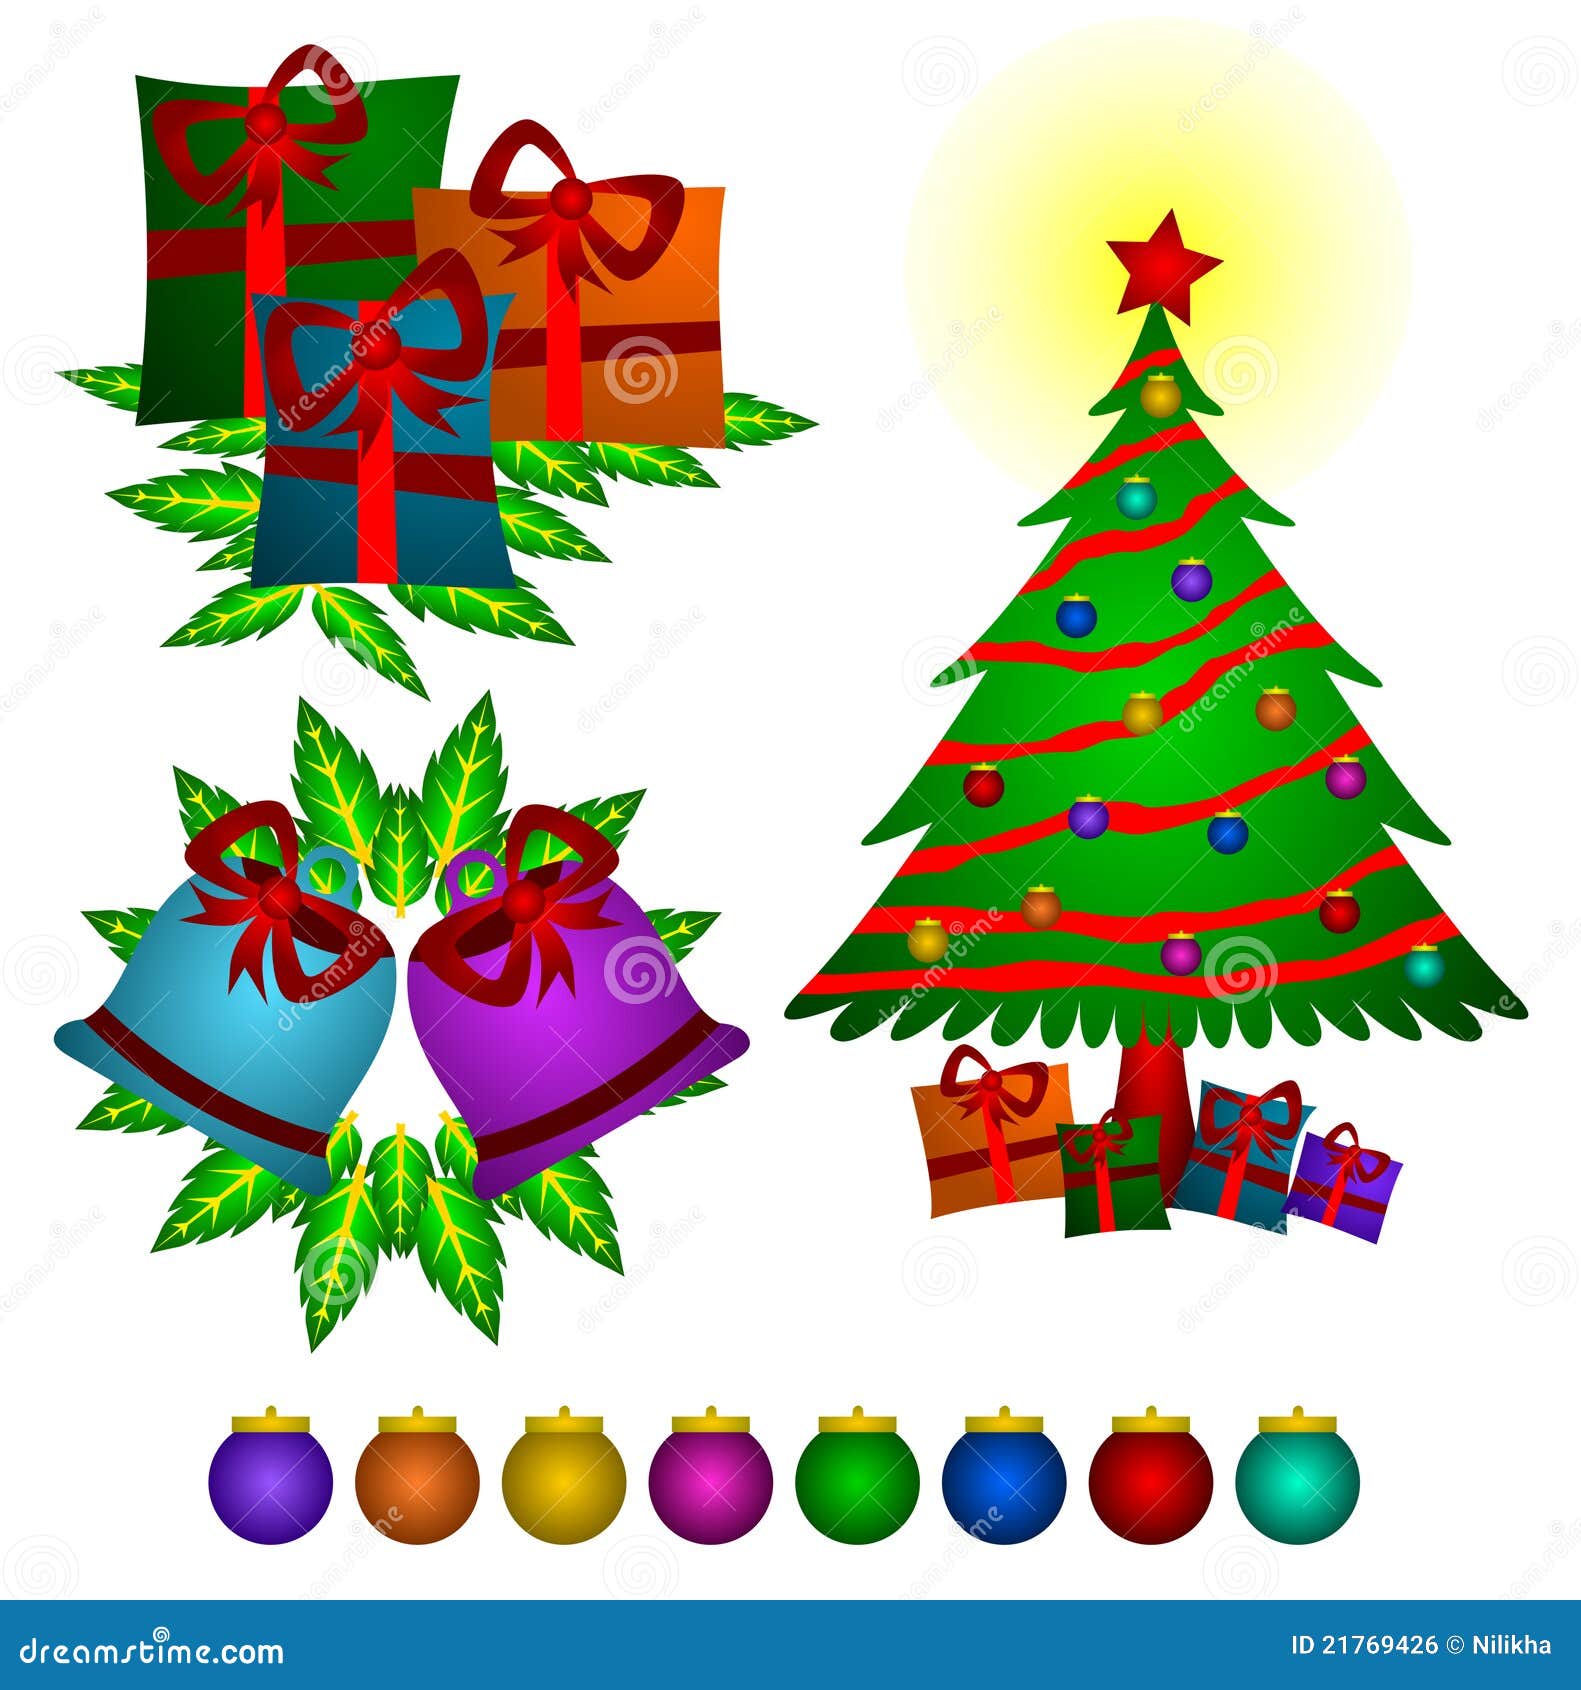 Christmas things stock illustration. Illustration of christmas - 21769426